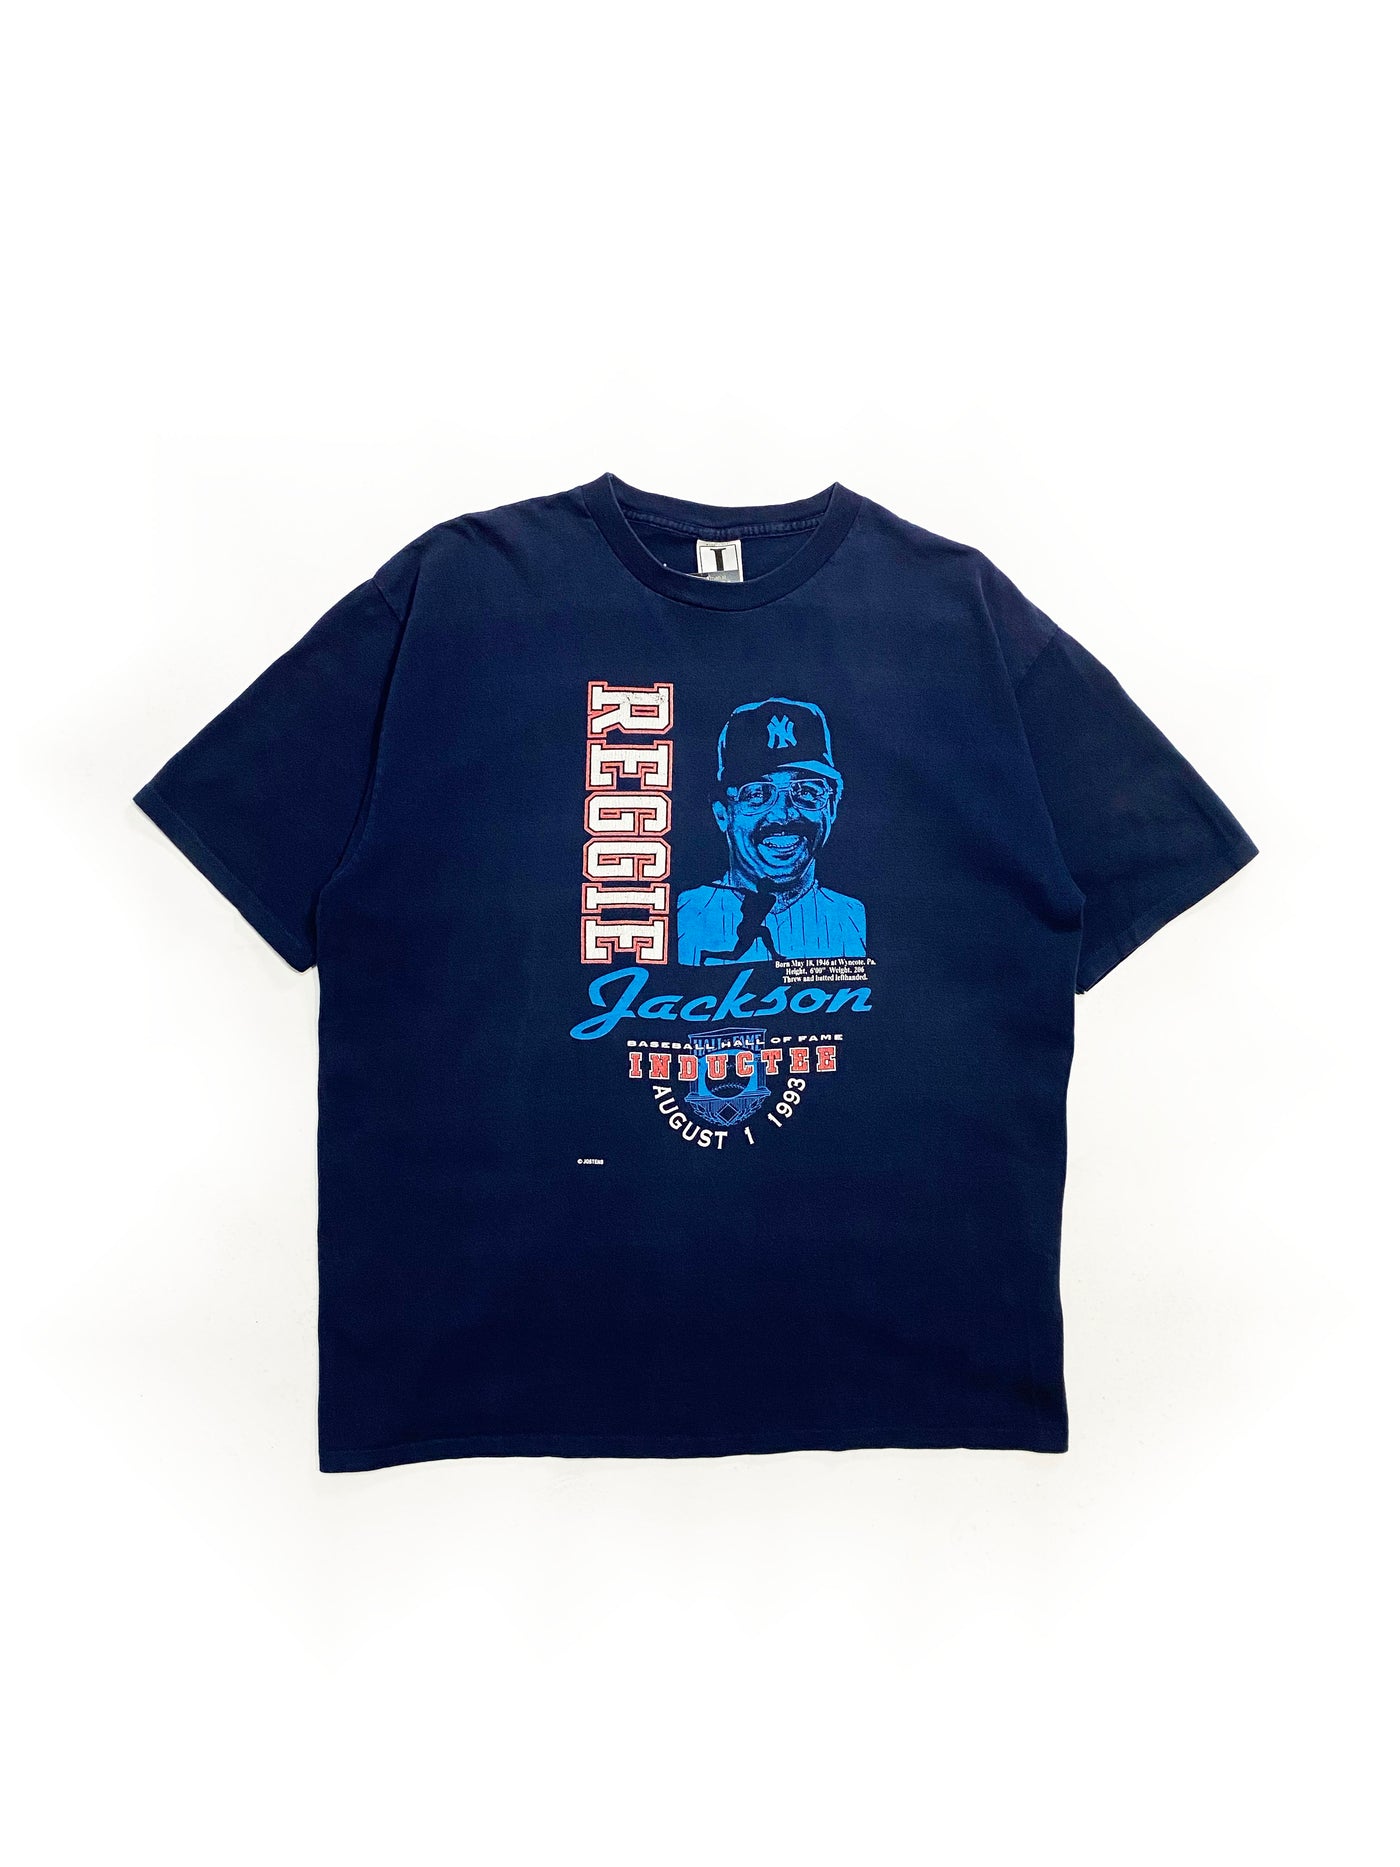 Vintage 1993 Reggie Jackson HOF Induction T-Shirt